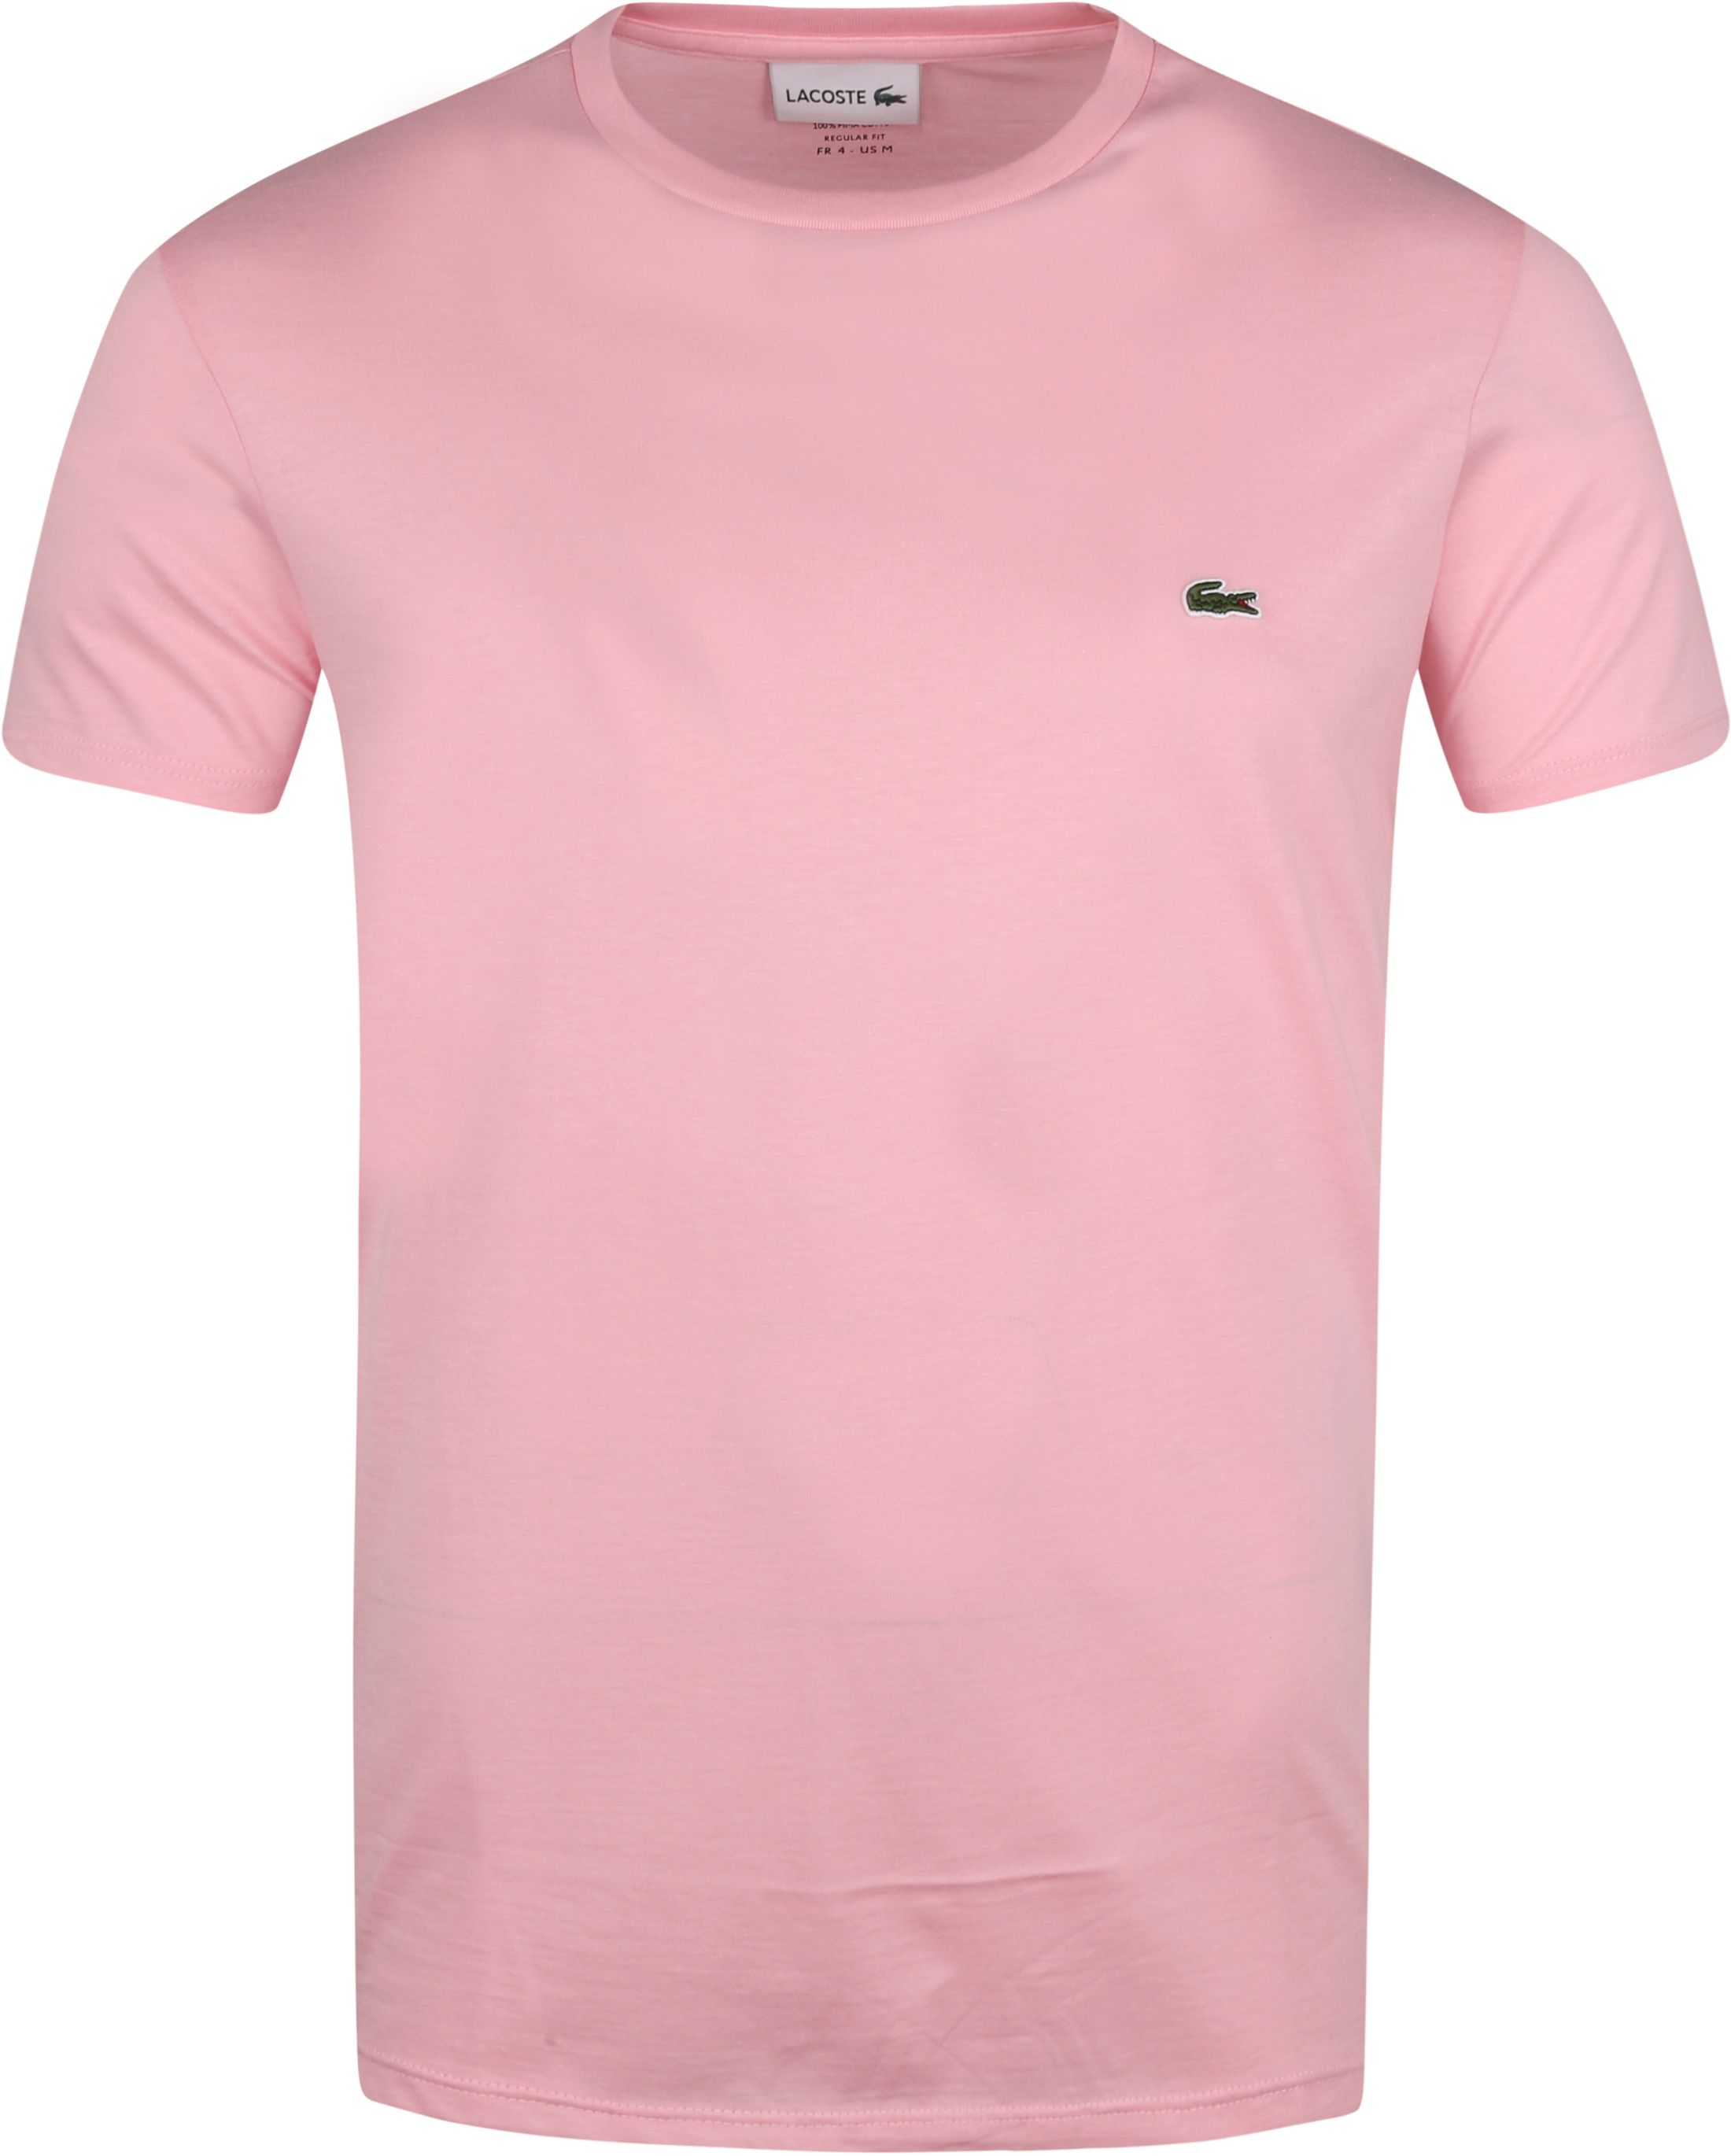 Lacoste T-Shirt Pink size L